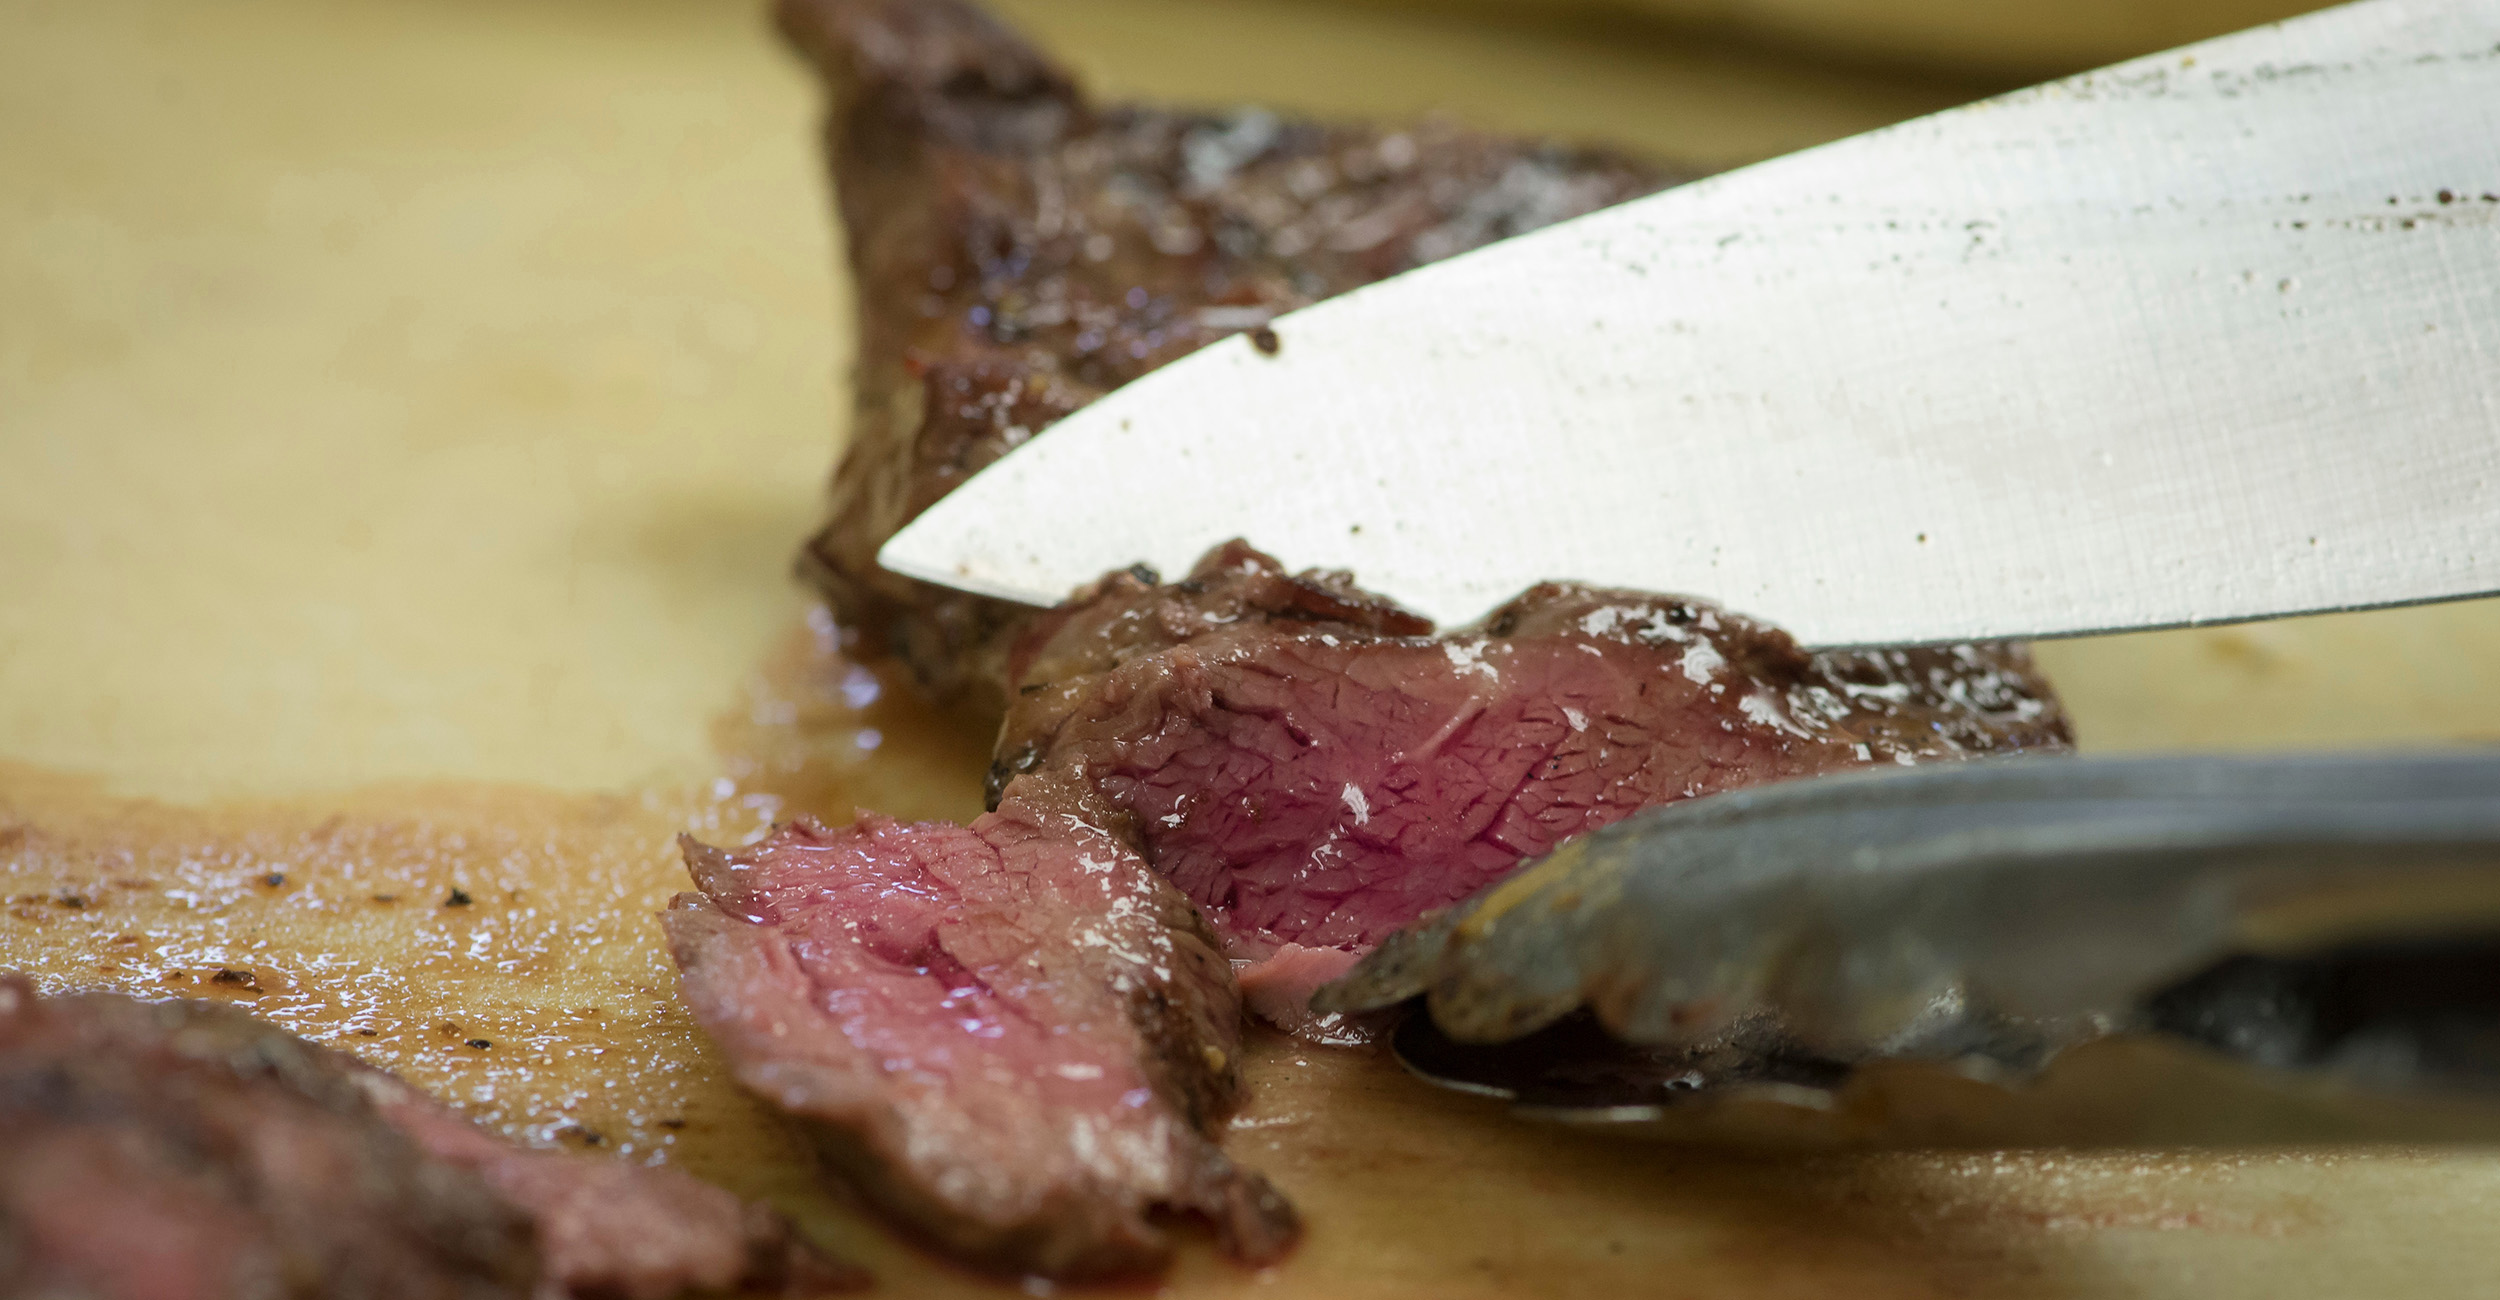 Close-up photo of a knife cutting through a juicy steak.